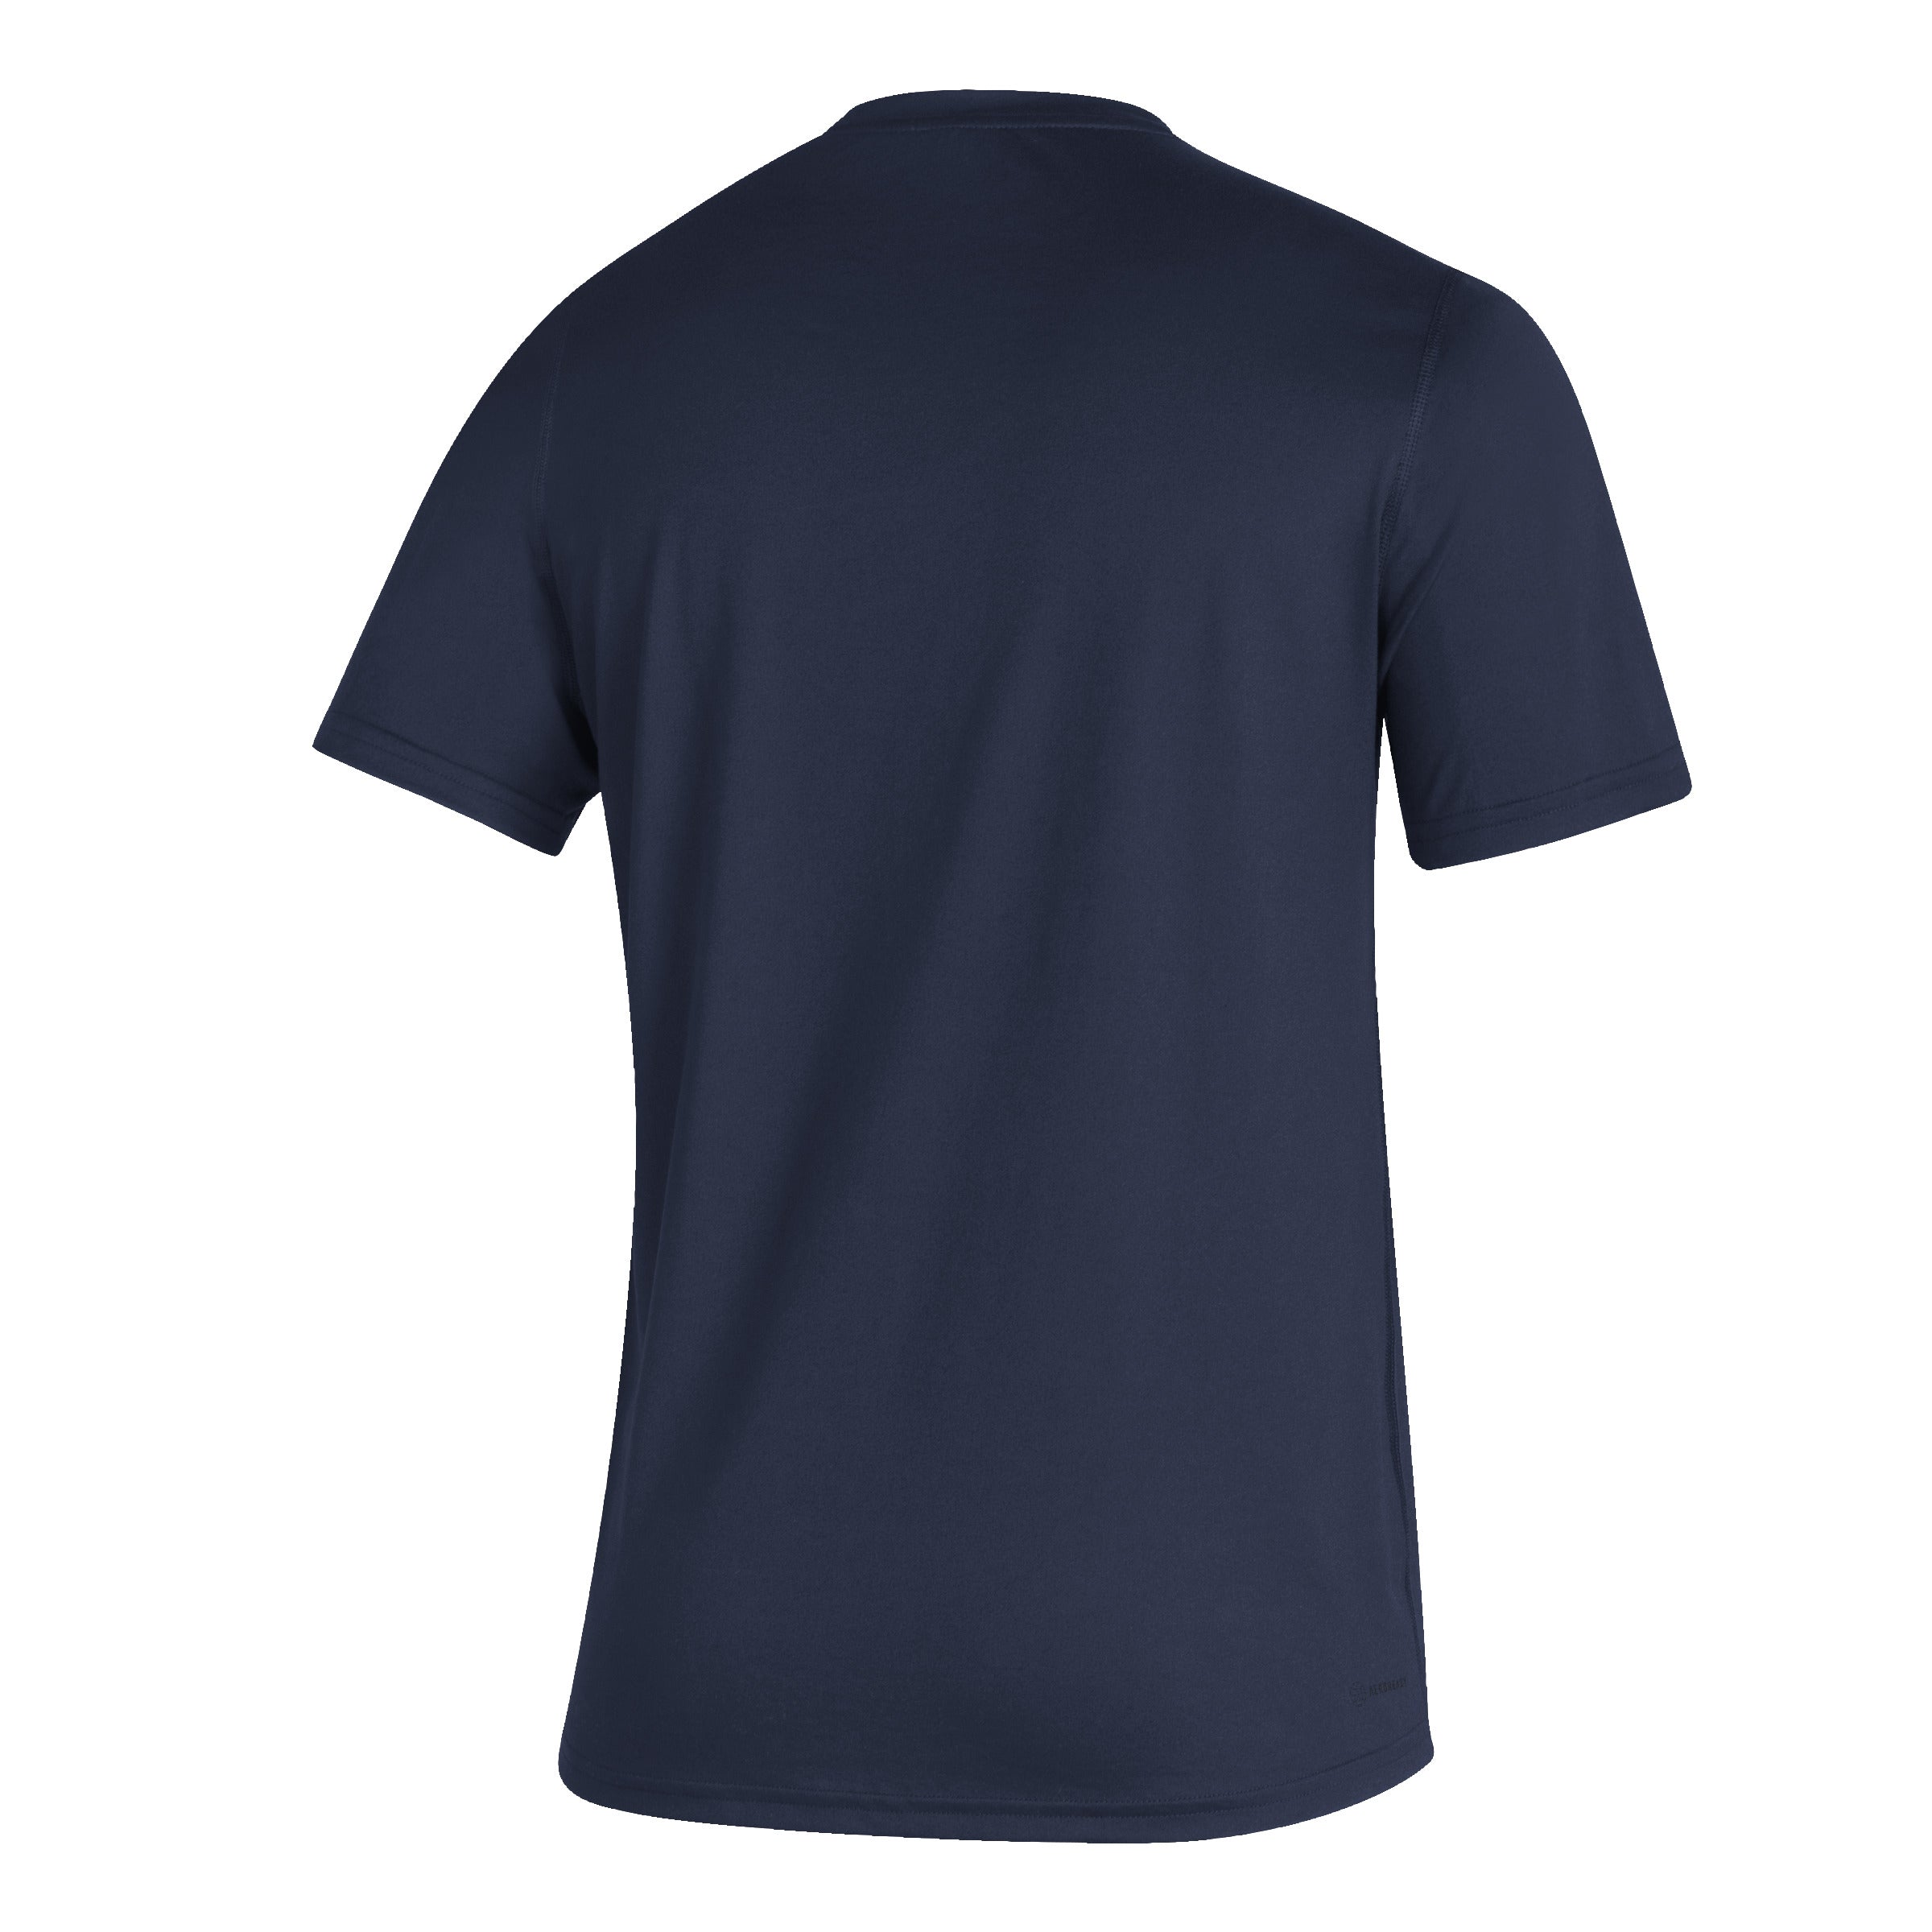 Florida Panthers adidas Laser Pointer Creator T-Shirt - Navy